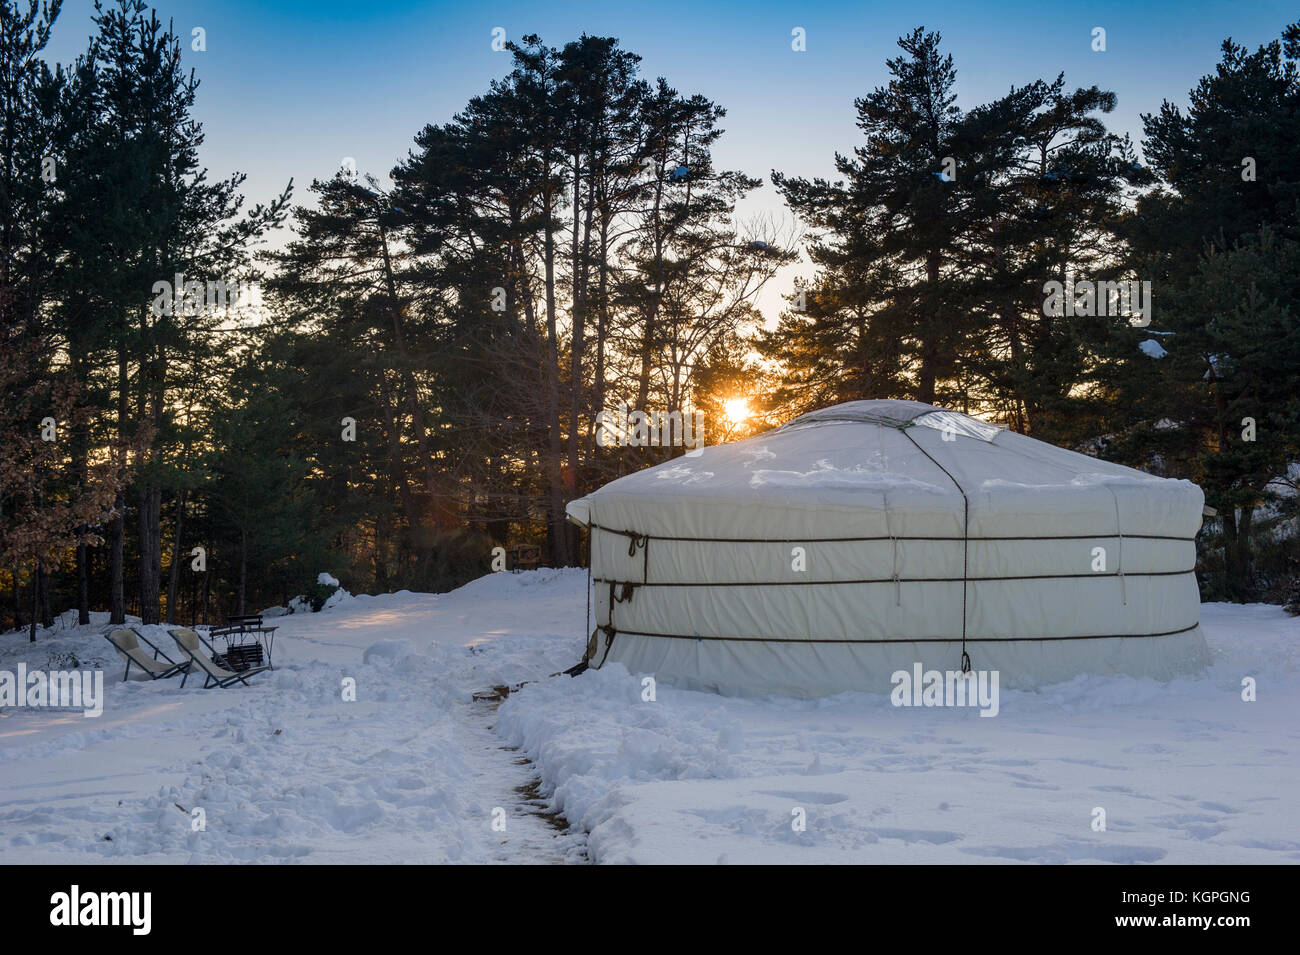 France. Alpes-de-Haute-Provence (04), Eoulx. Yurt in a snow Stock Photo